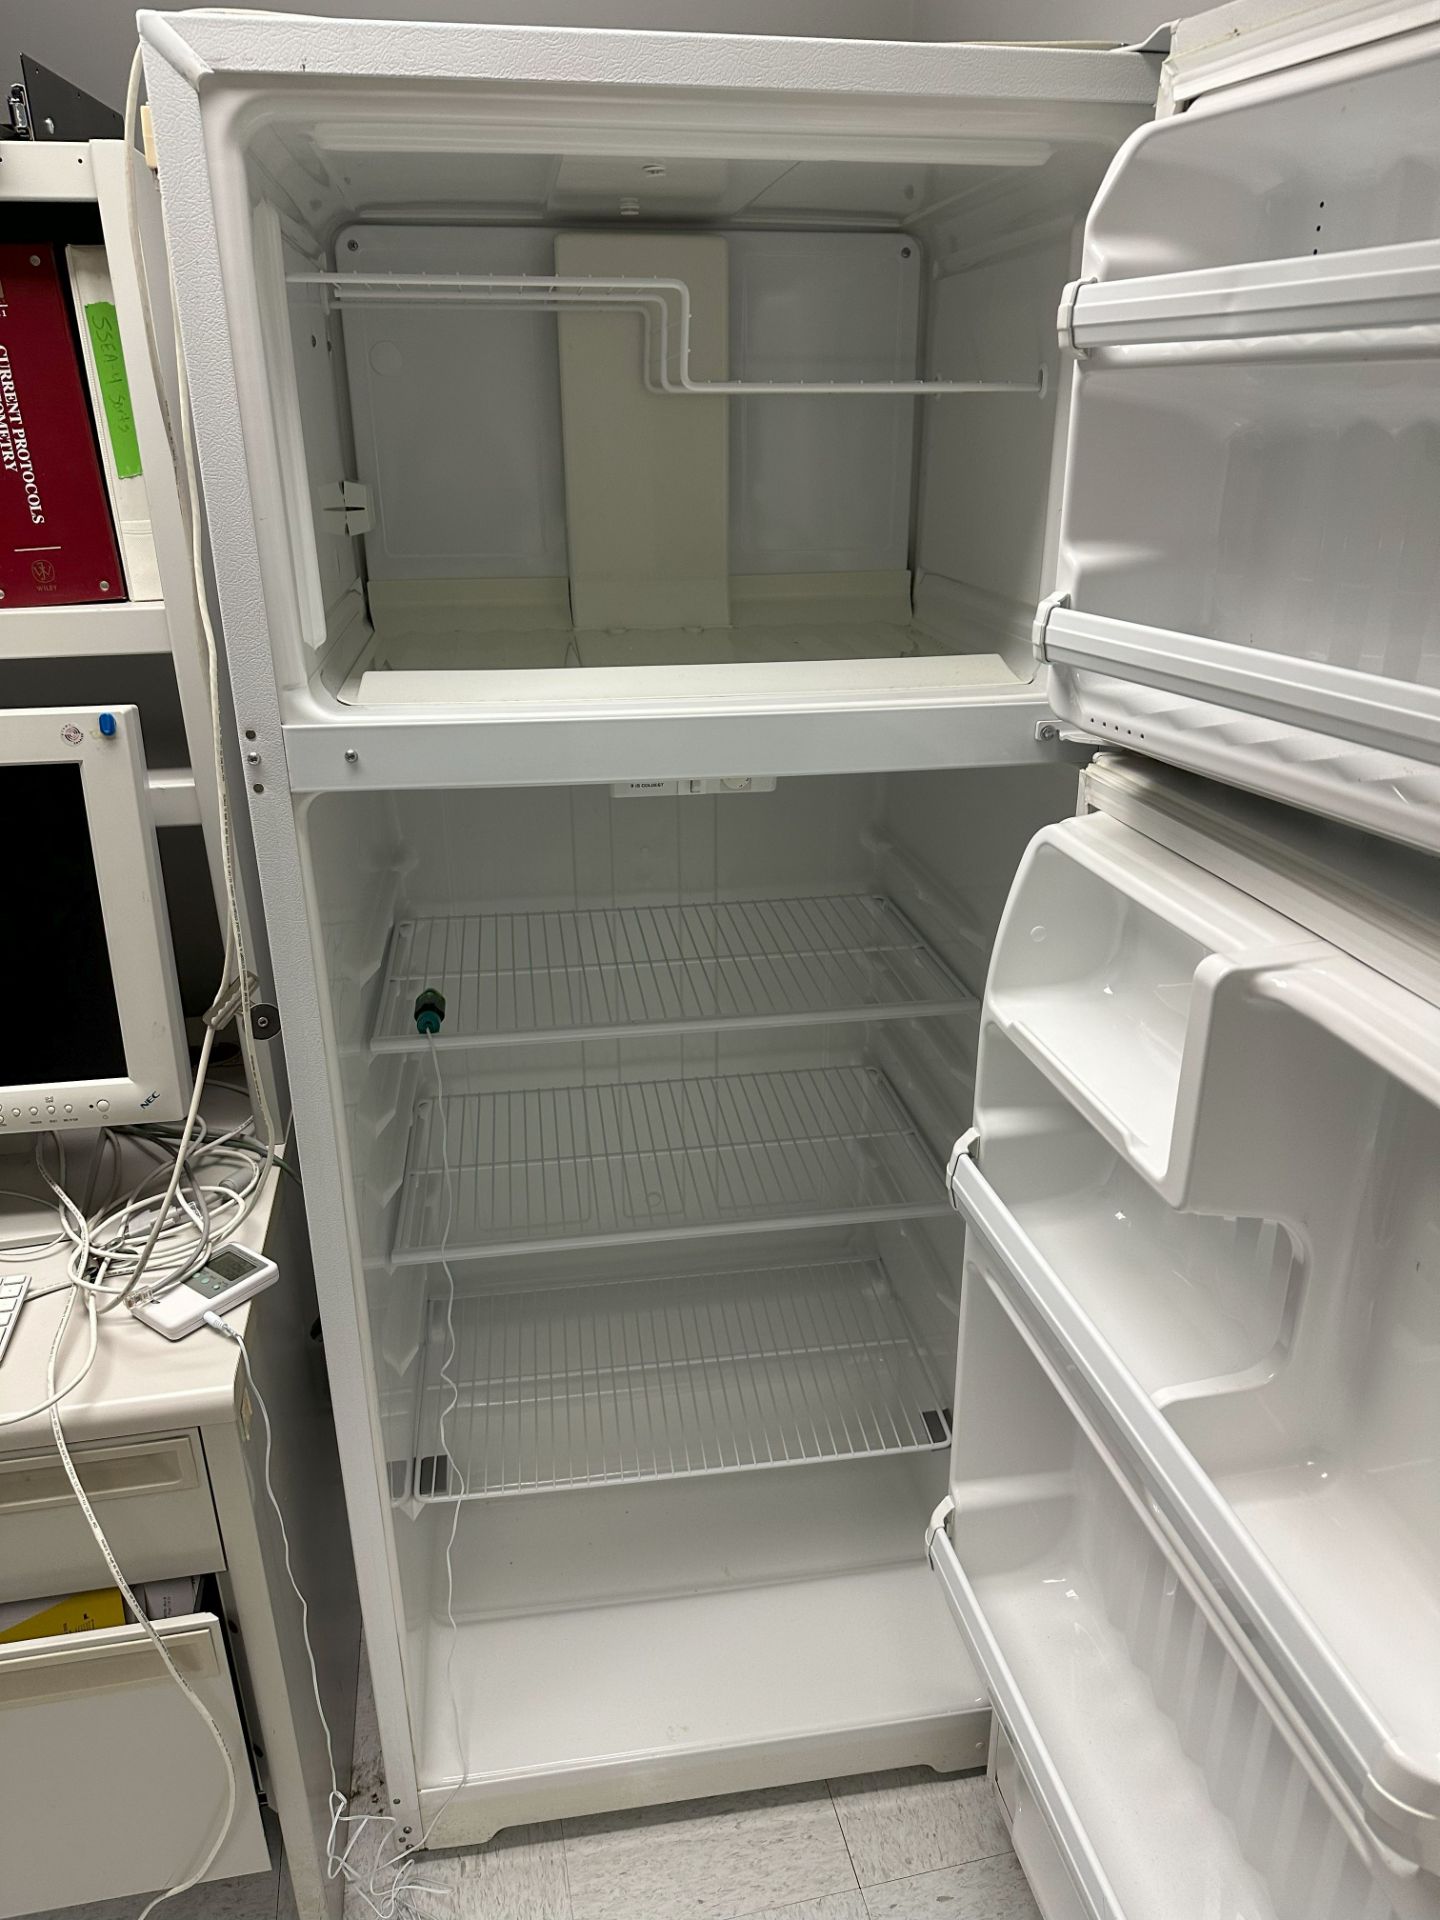 Refrigerator/Freezer - Image 2 of 4